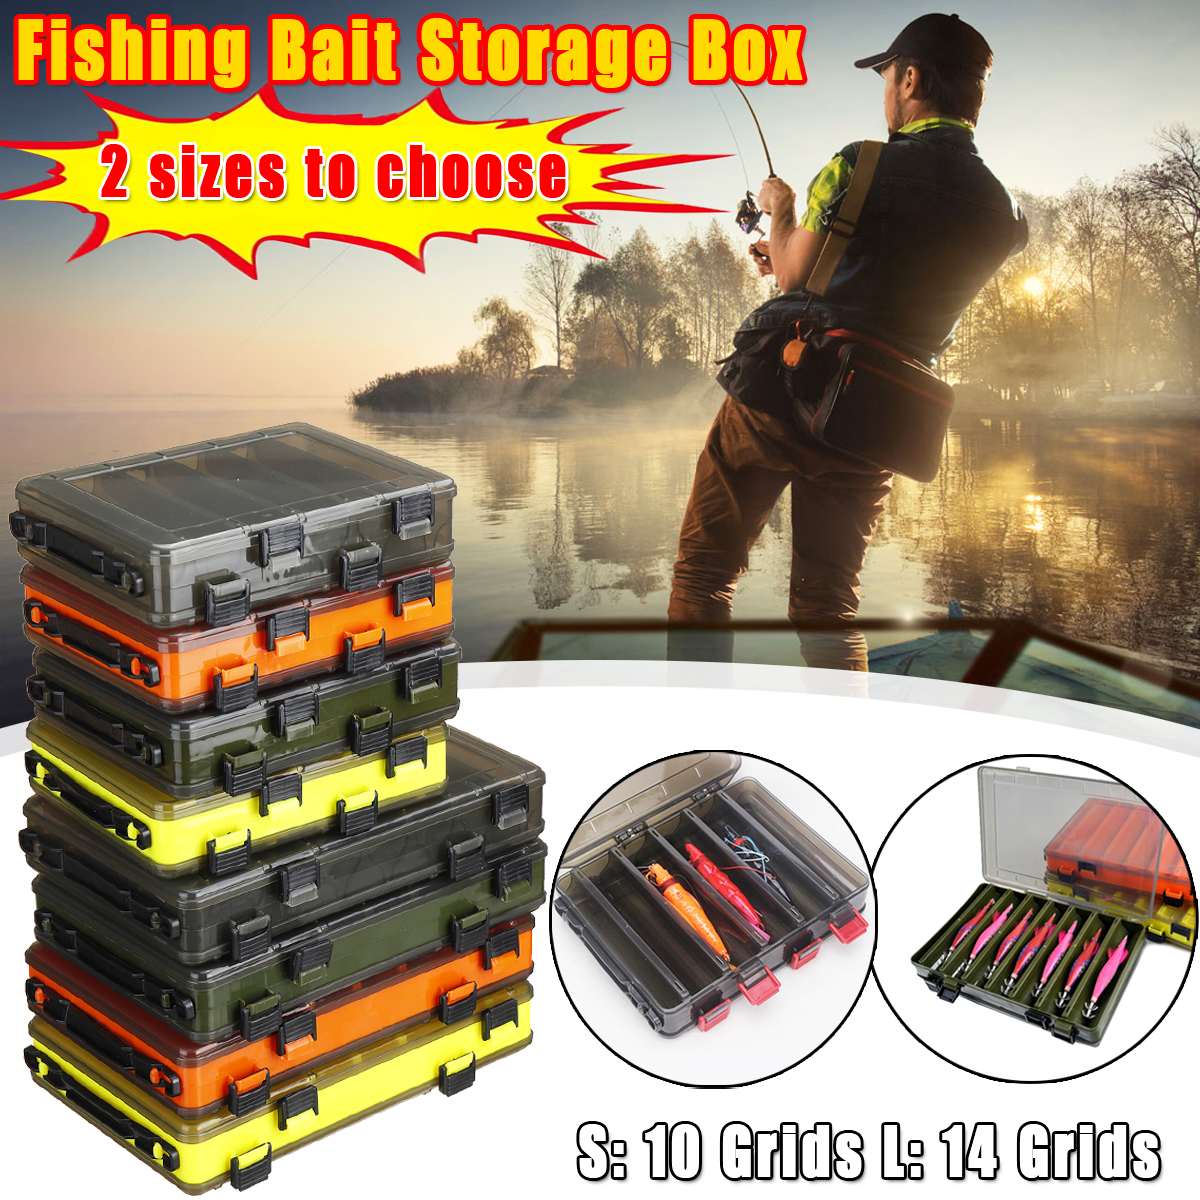 ZABLURE-1014-Grid-Fish-Lure-Box-Double-Sided-Plastic-Fishing-Bait-Case-Tackle-Storage-Box-1619937-1